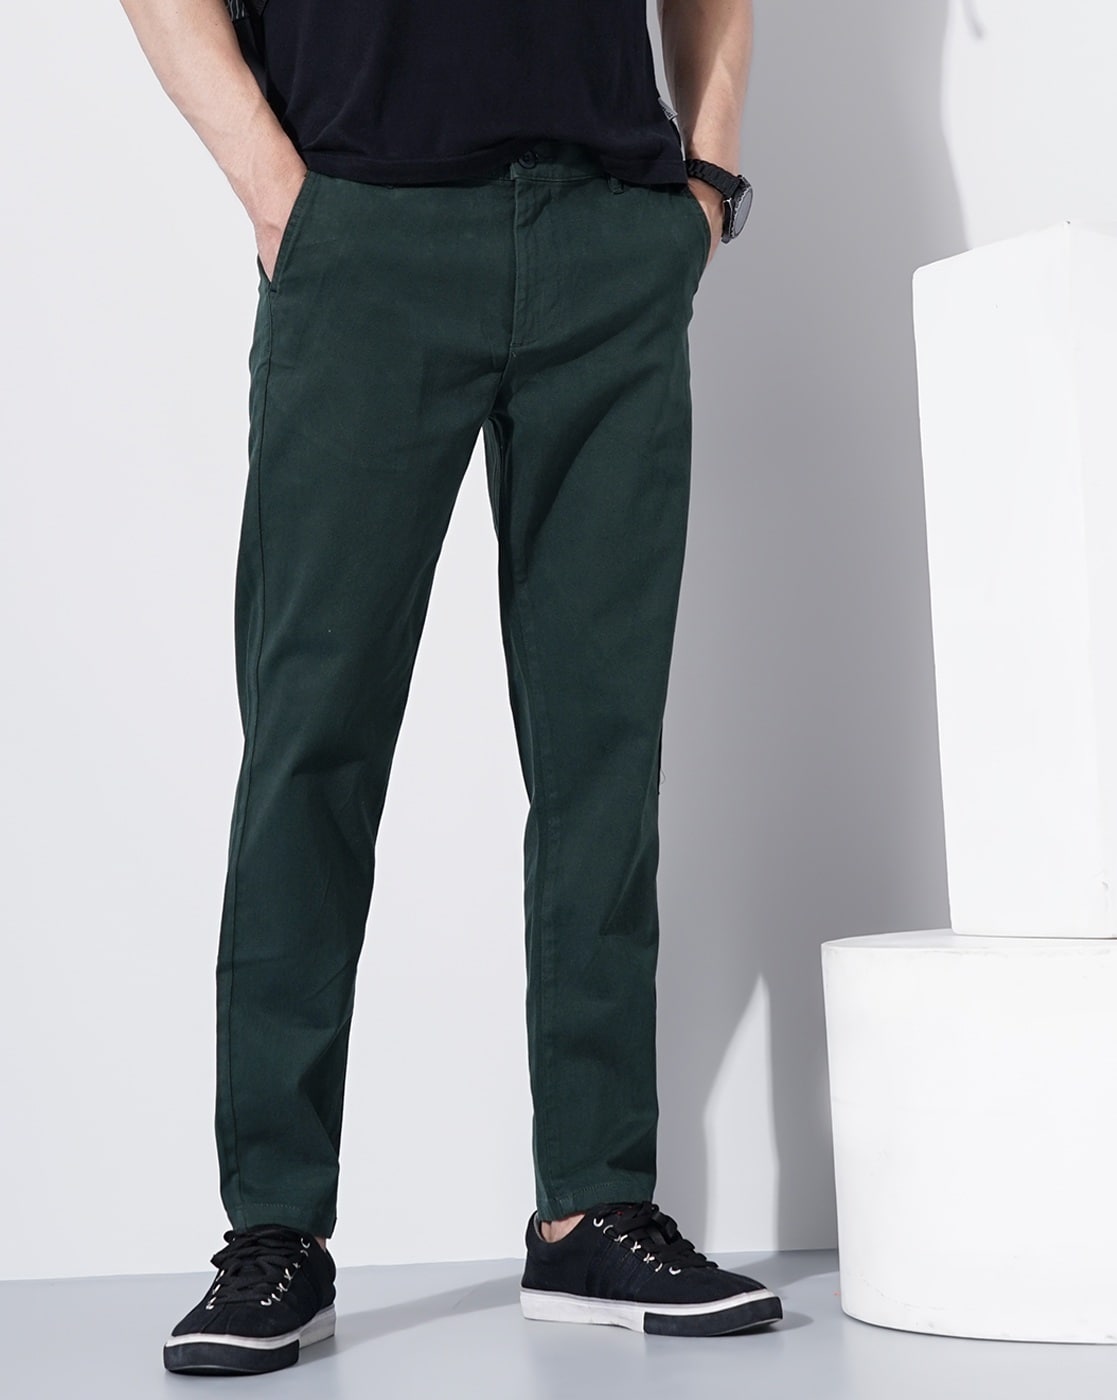 Buy Black Trousers & Pants for Women by AJIO Online | Ajio.com